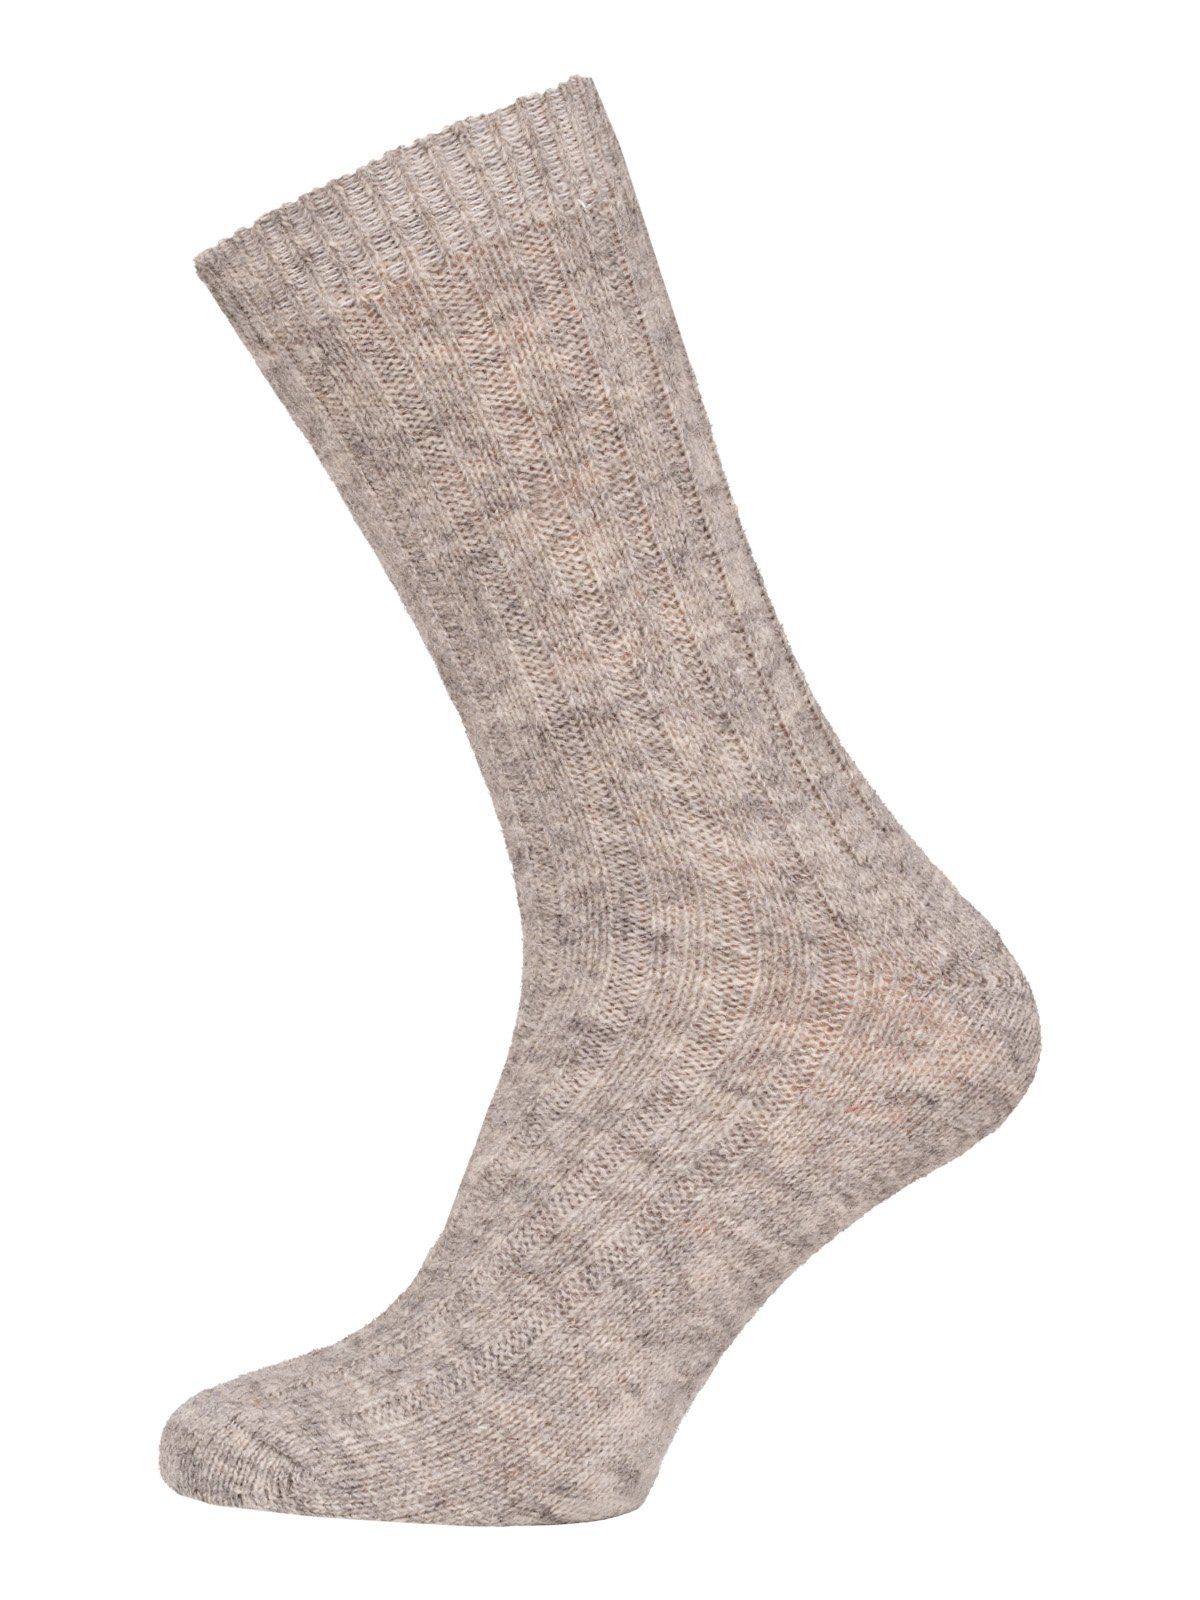 HomeOfSocks Socken Wollsocken aus 95% & Wolle Schurwolle) Grau (Alpakawolle